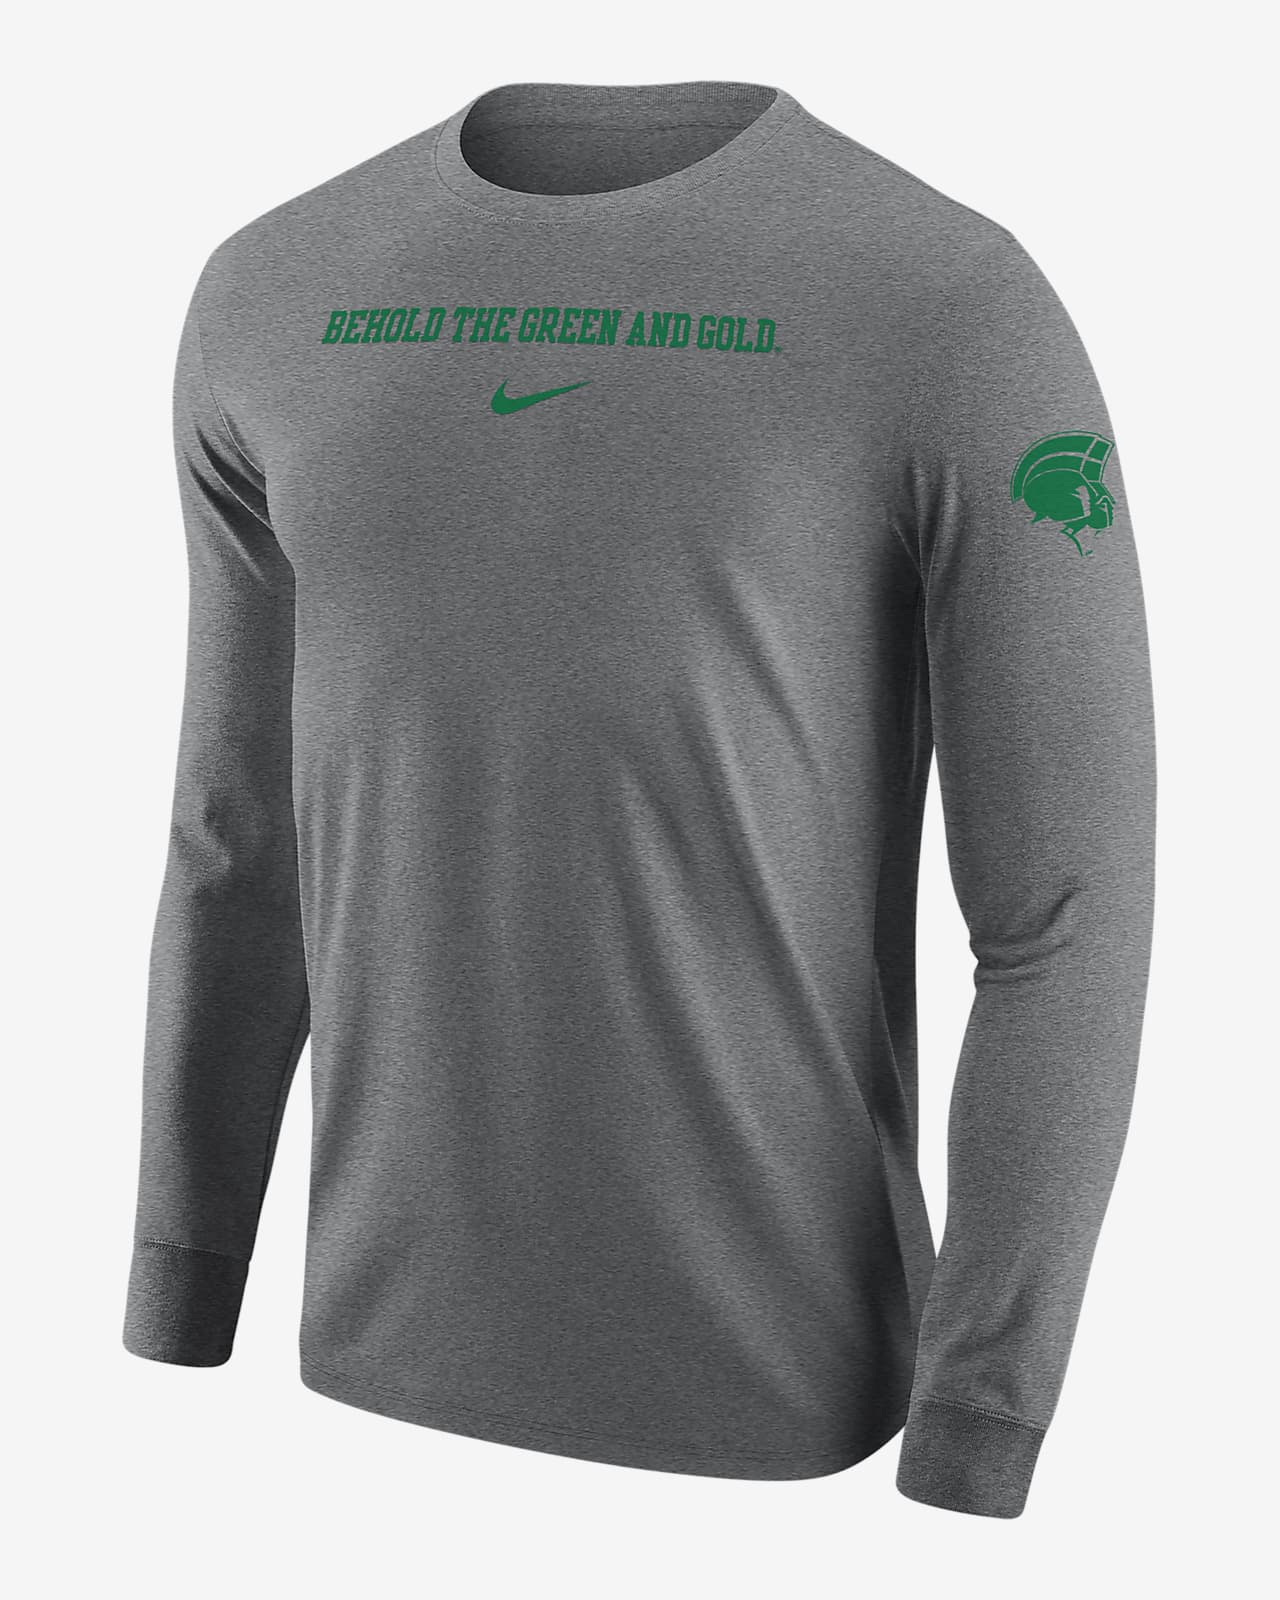 Norfolk State Men's Nike College Long-Sleeve T-Shirt